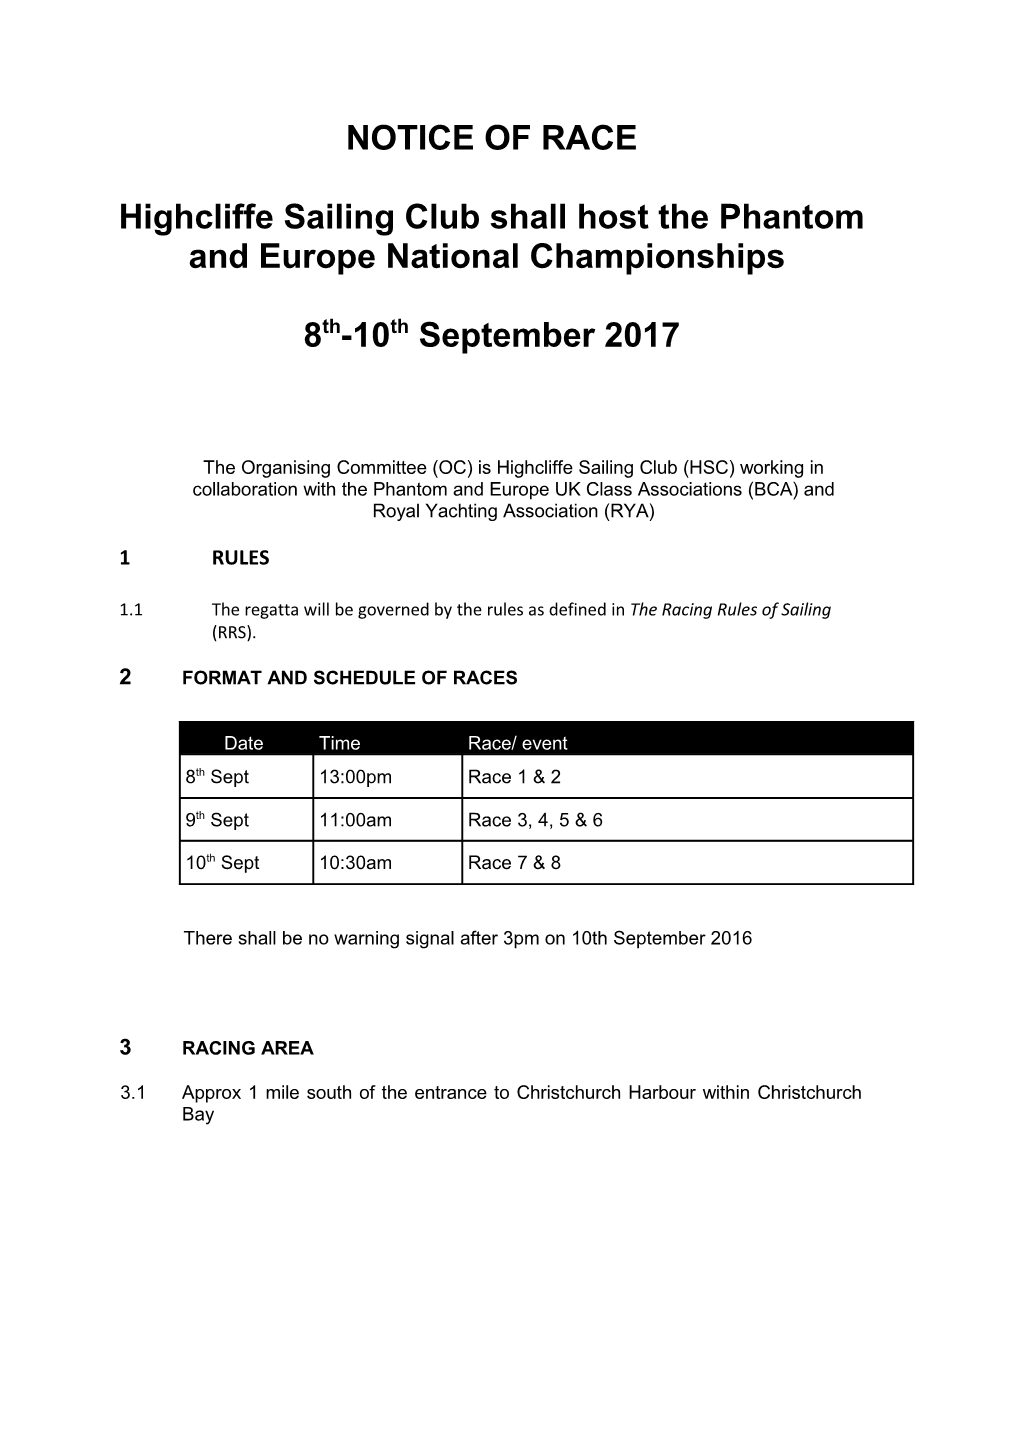 Highcliffe Sailing Club Shall Host the Phantom and Europe National Championships